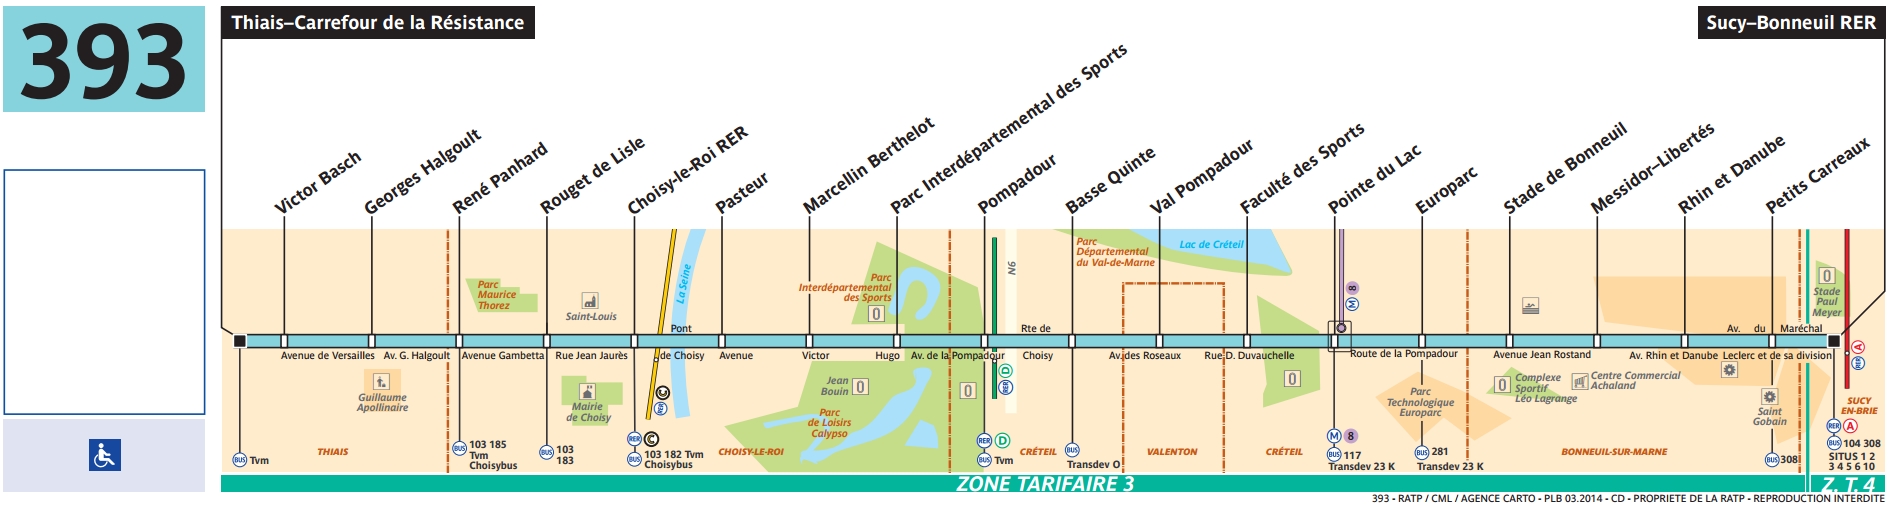 Plan bus Ligne 393